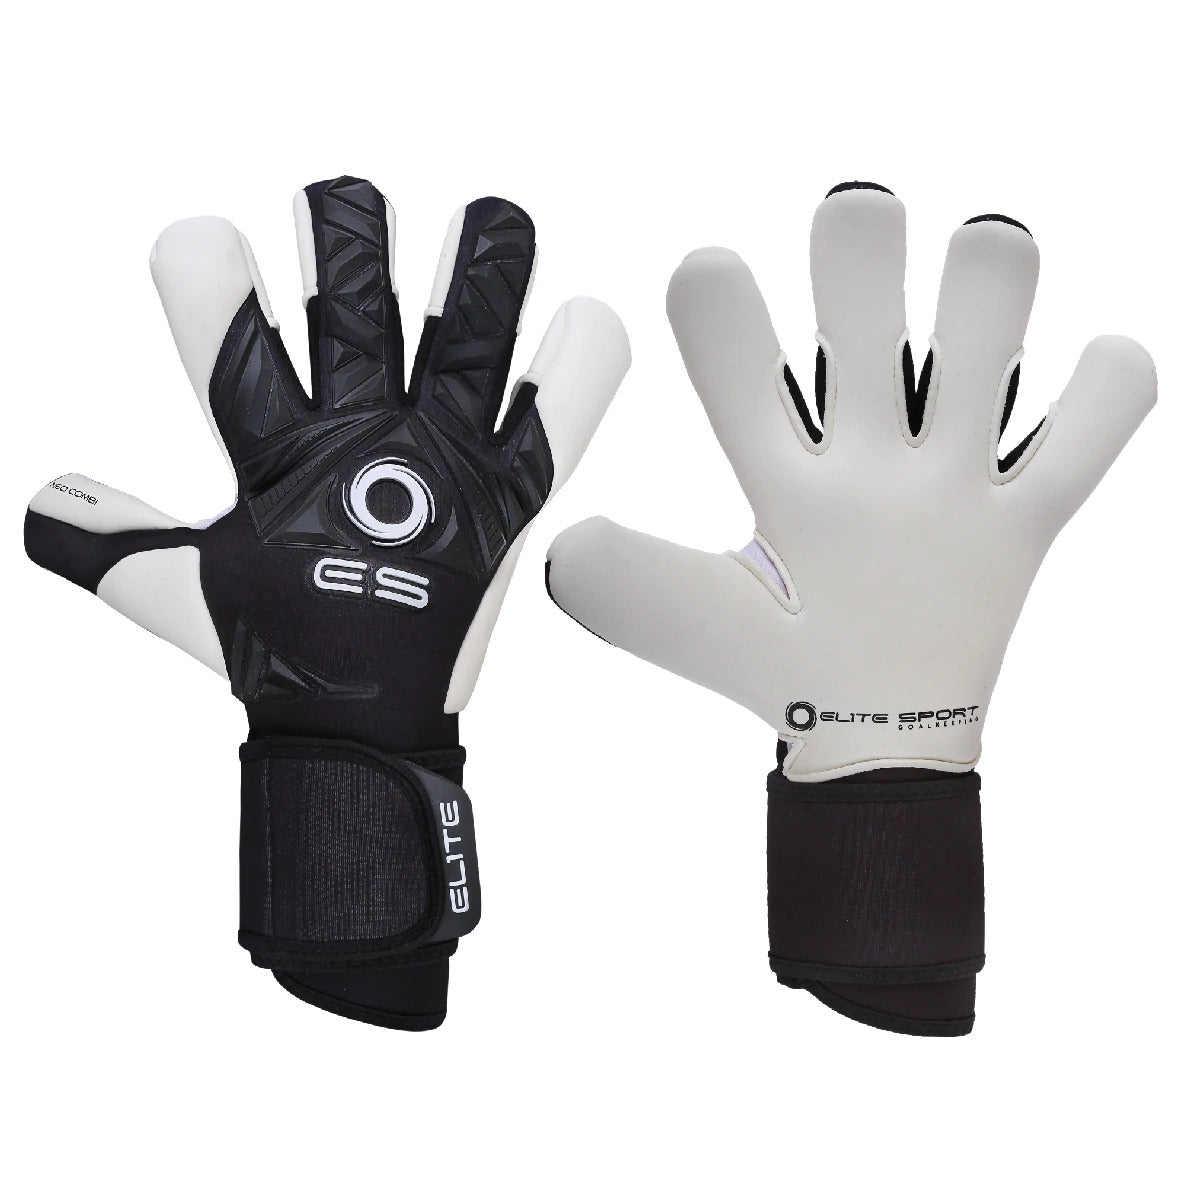 Elite Sport 2022 Neo Combi Goalkeeper Glove - Black-White (Pair)